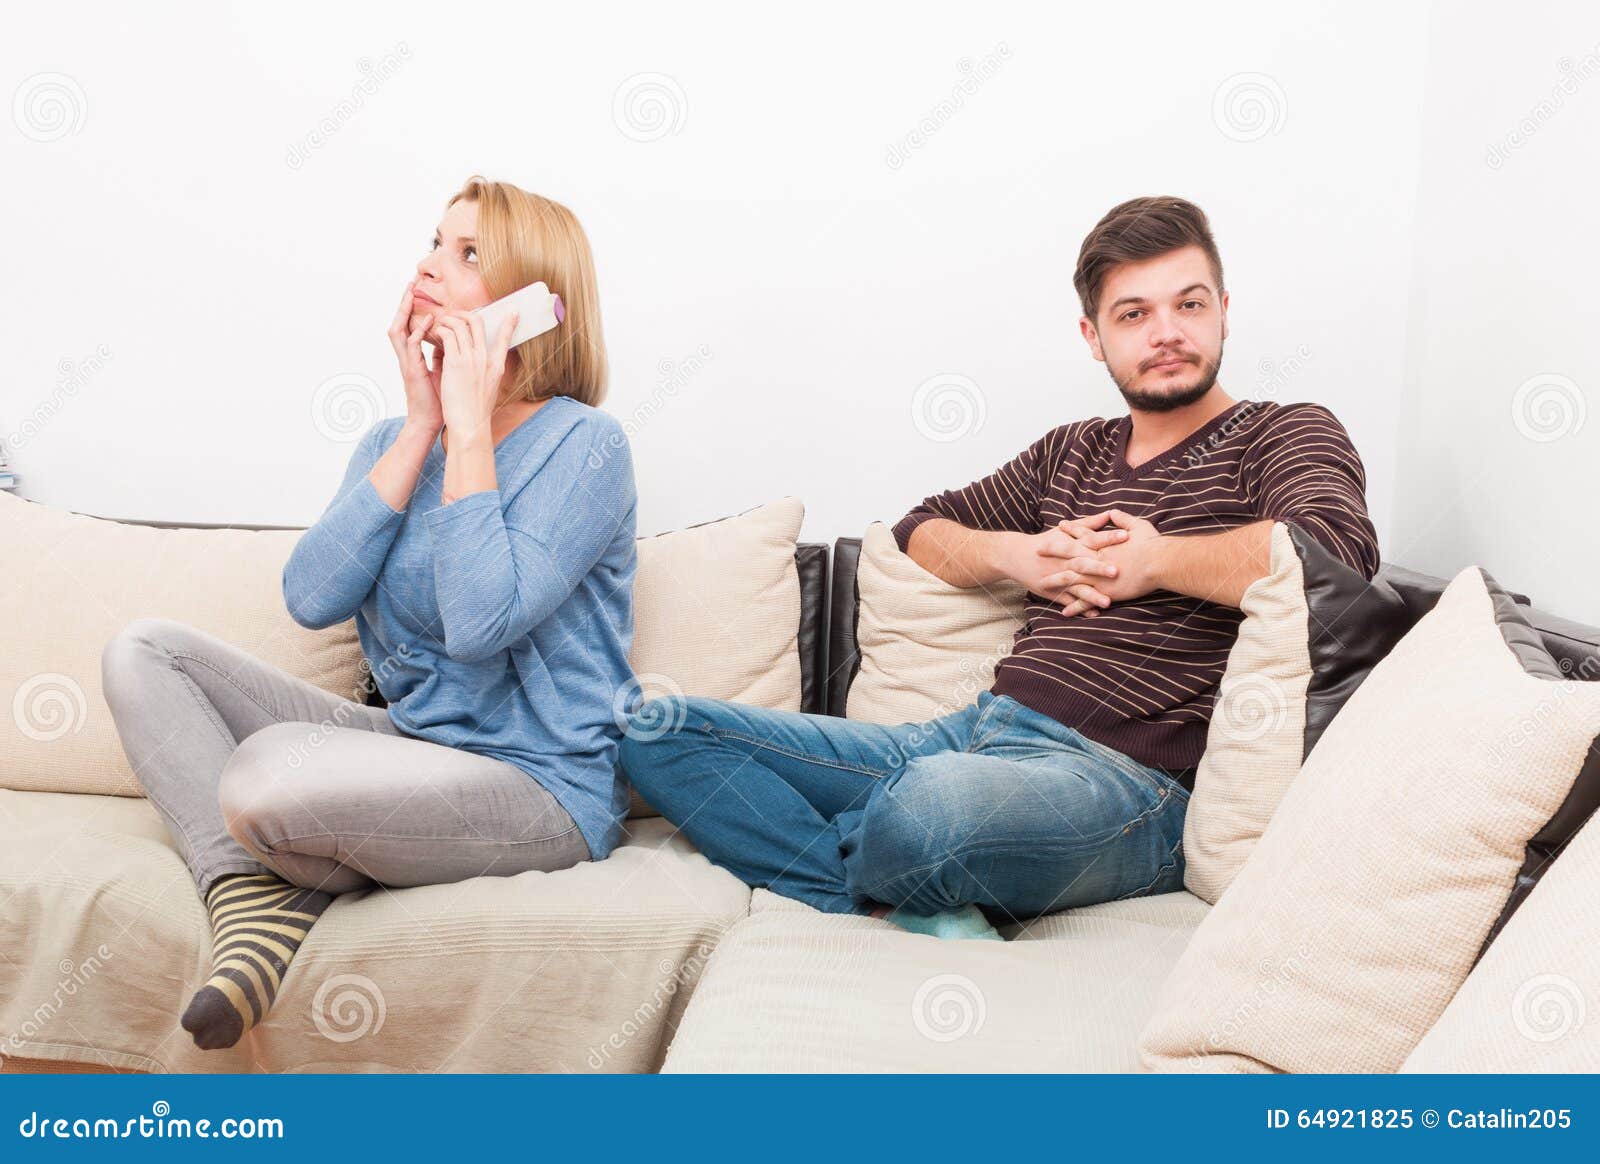 Пока муж смотрит телевизор жена. A wifes Phone.